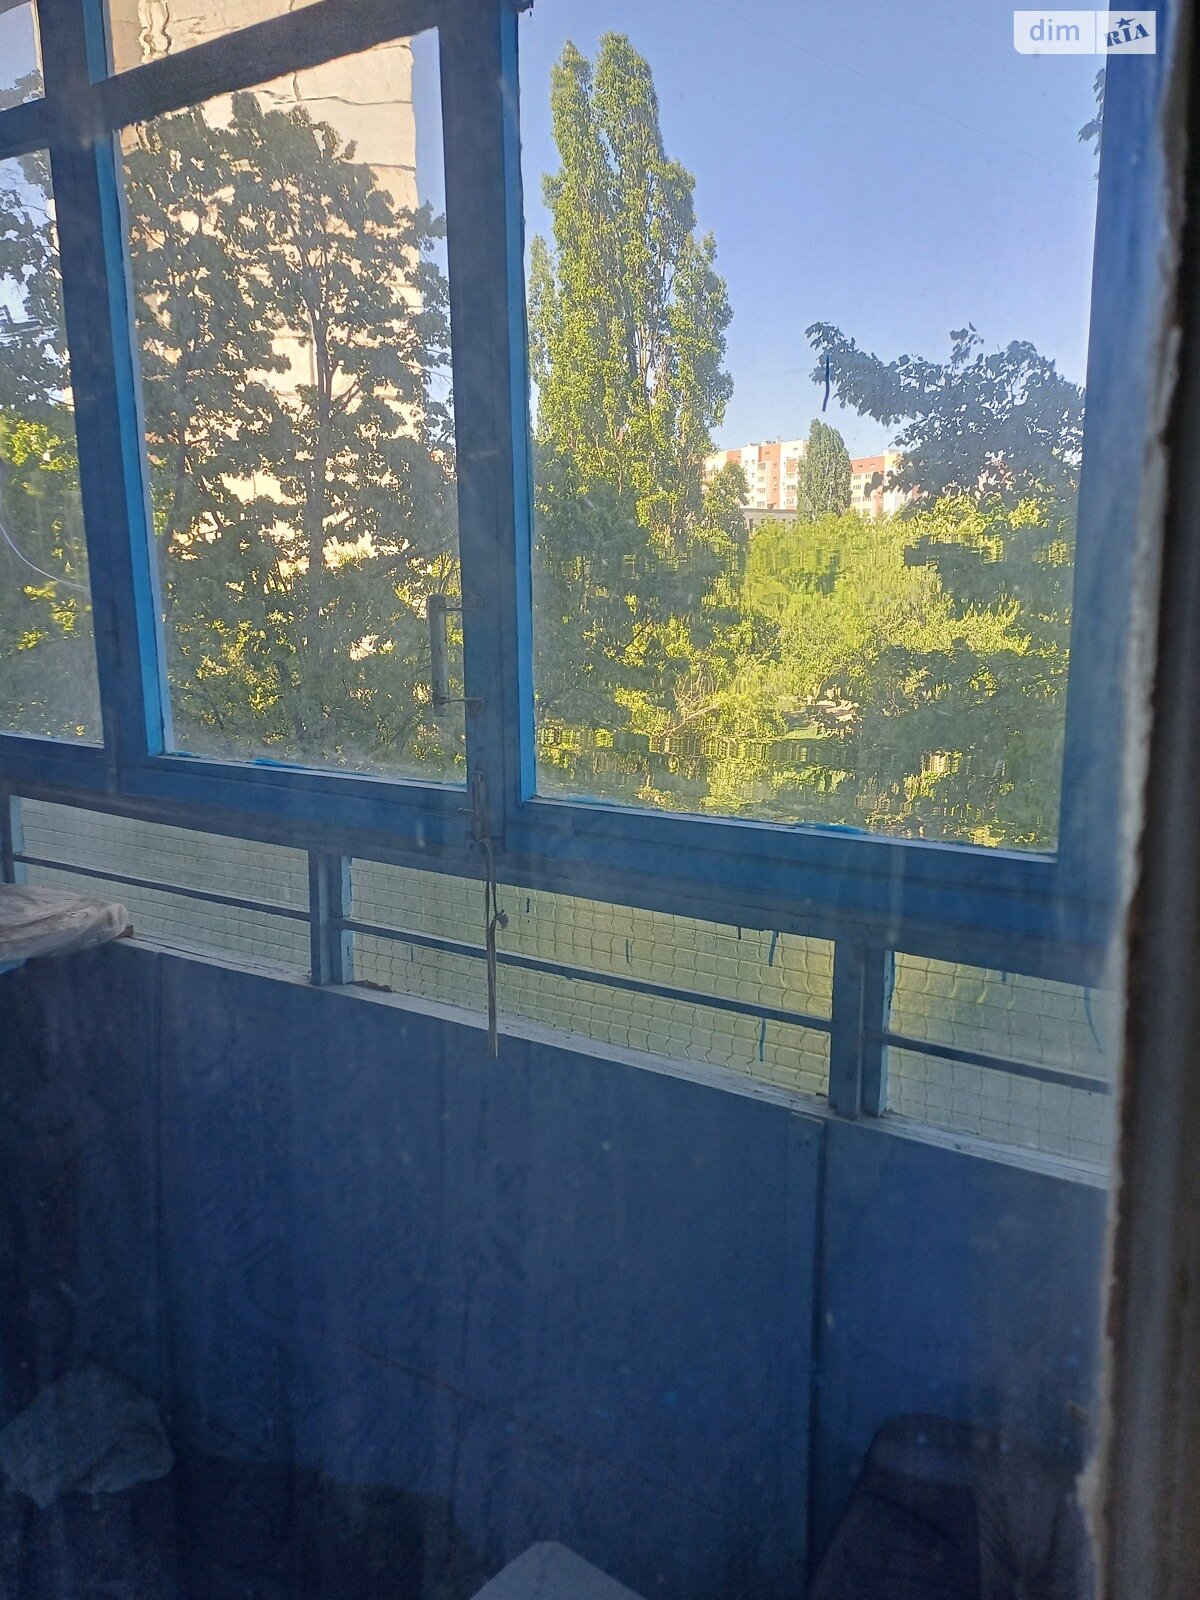 Продажа трехкомнатной квартиры в Харькове, на ул. Амосова 52, район Салтовка фото 1